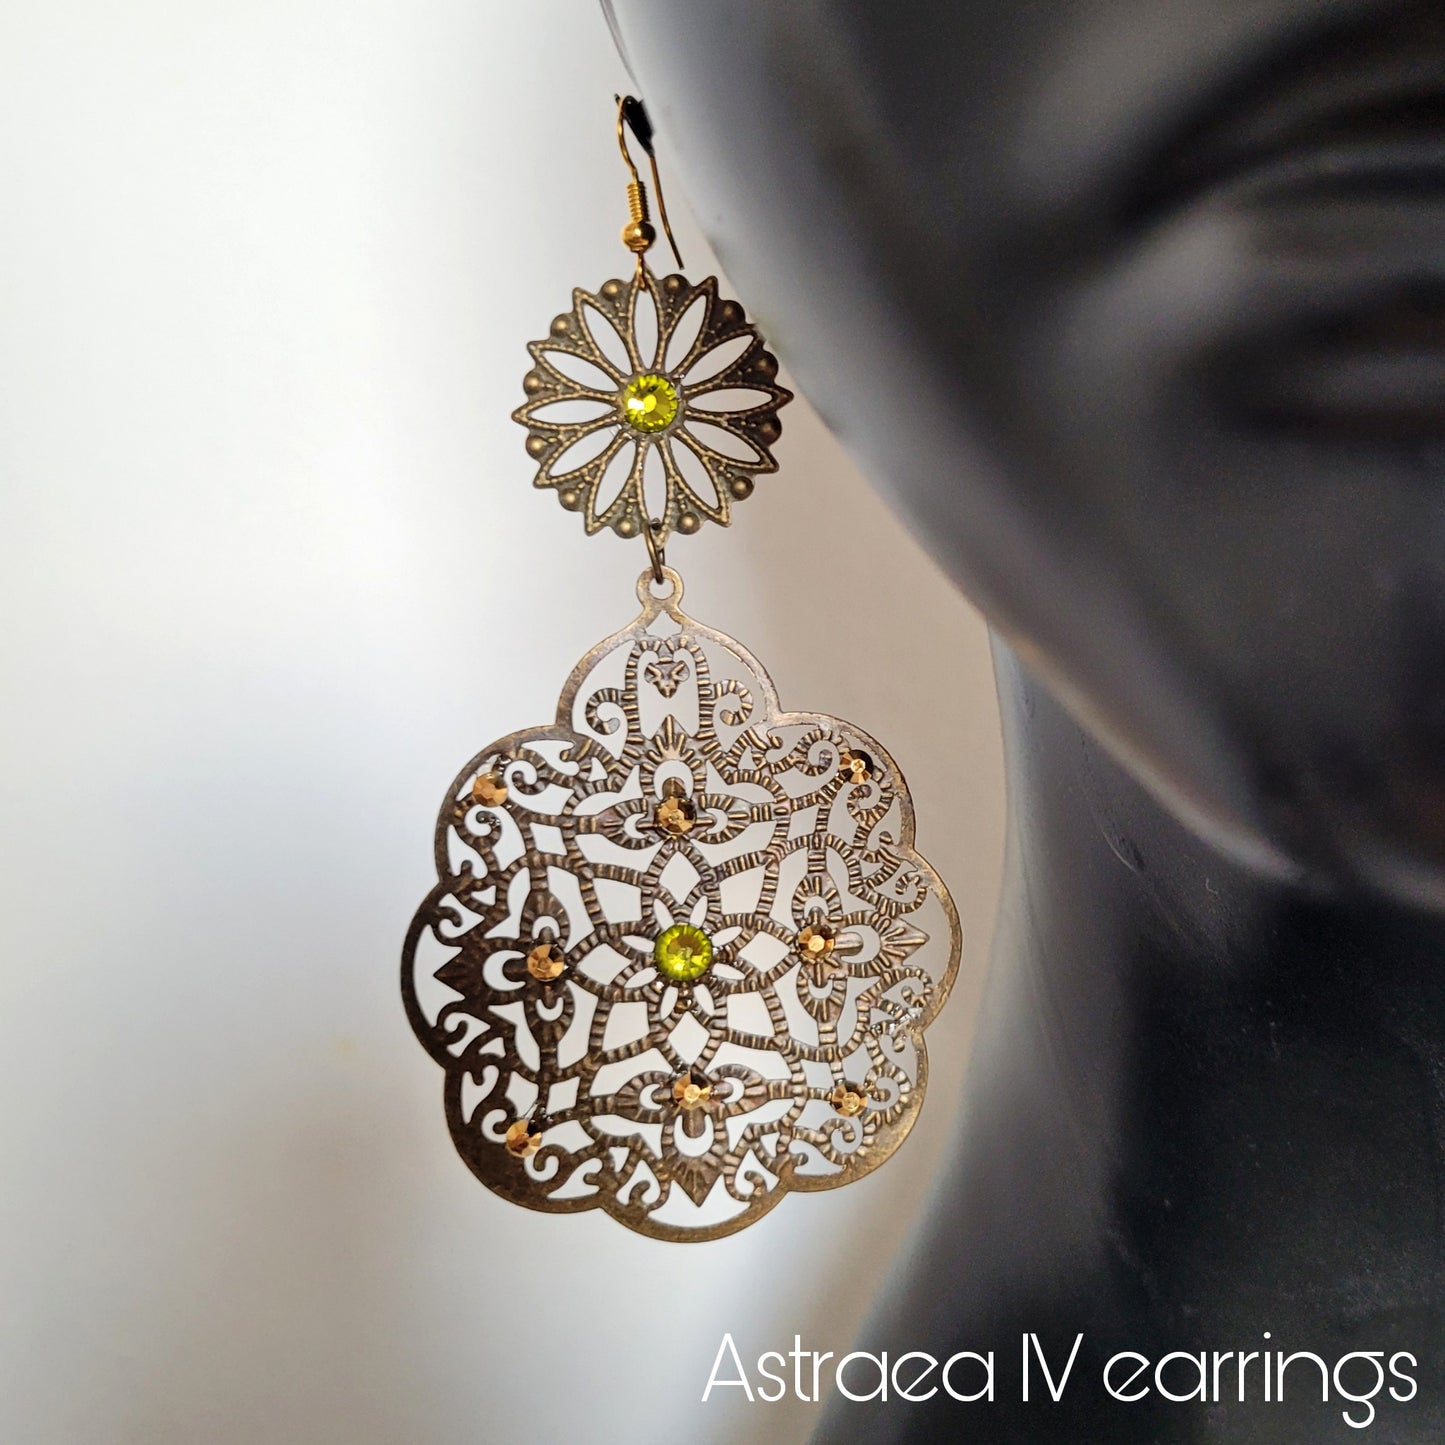 Deusa ex Machina collection: The Astraea earrings